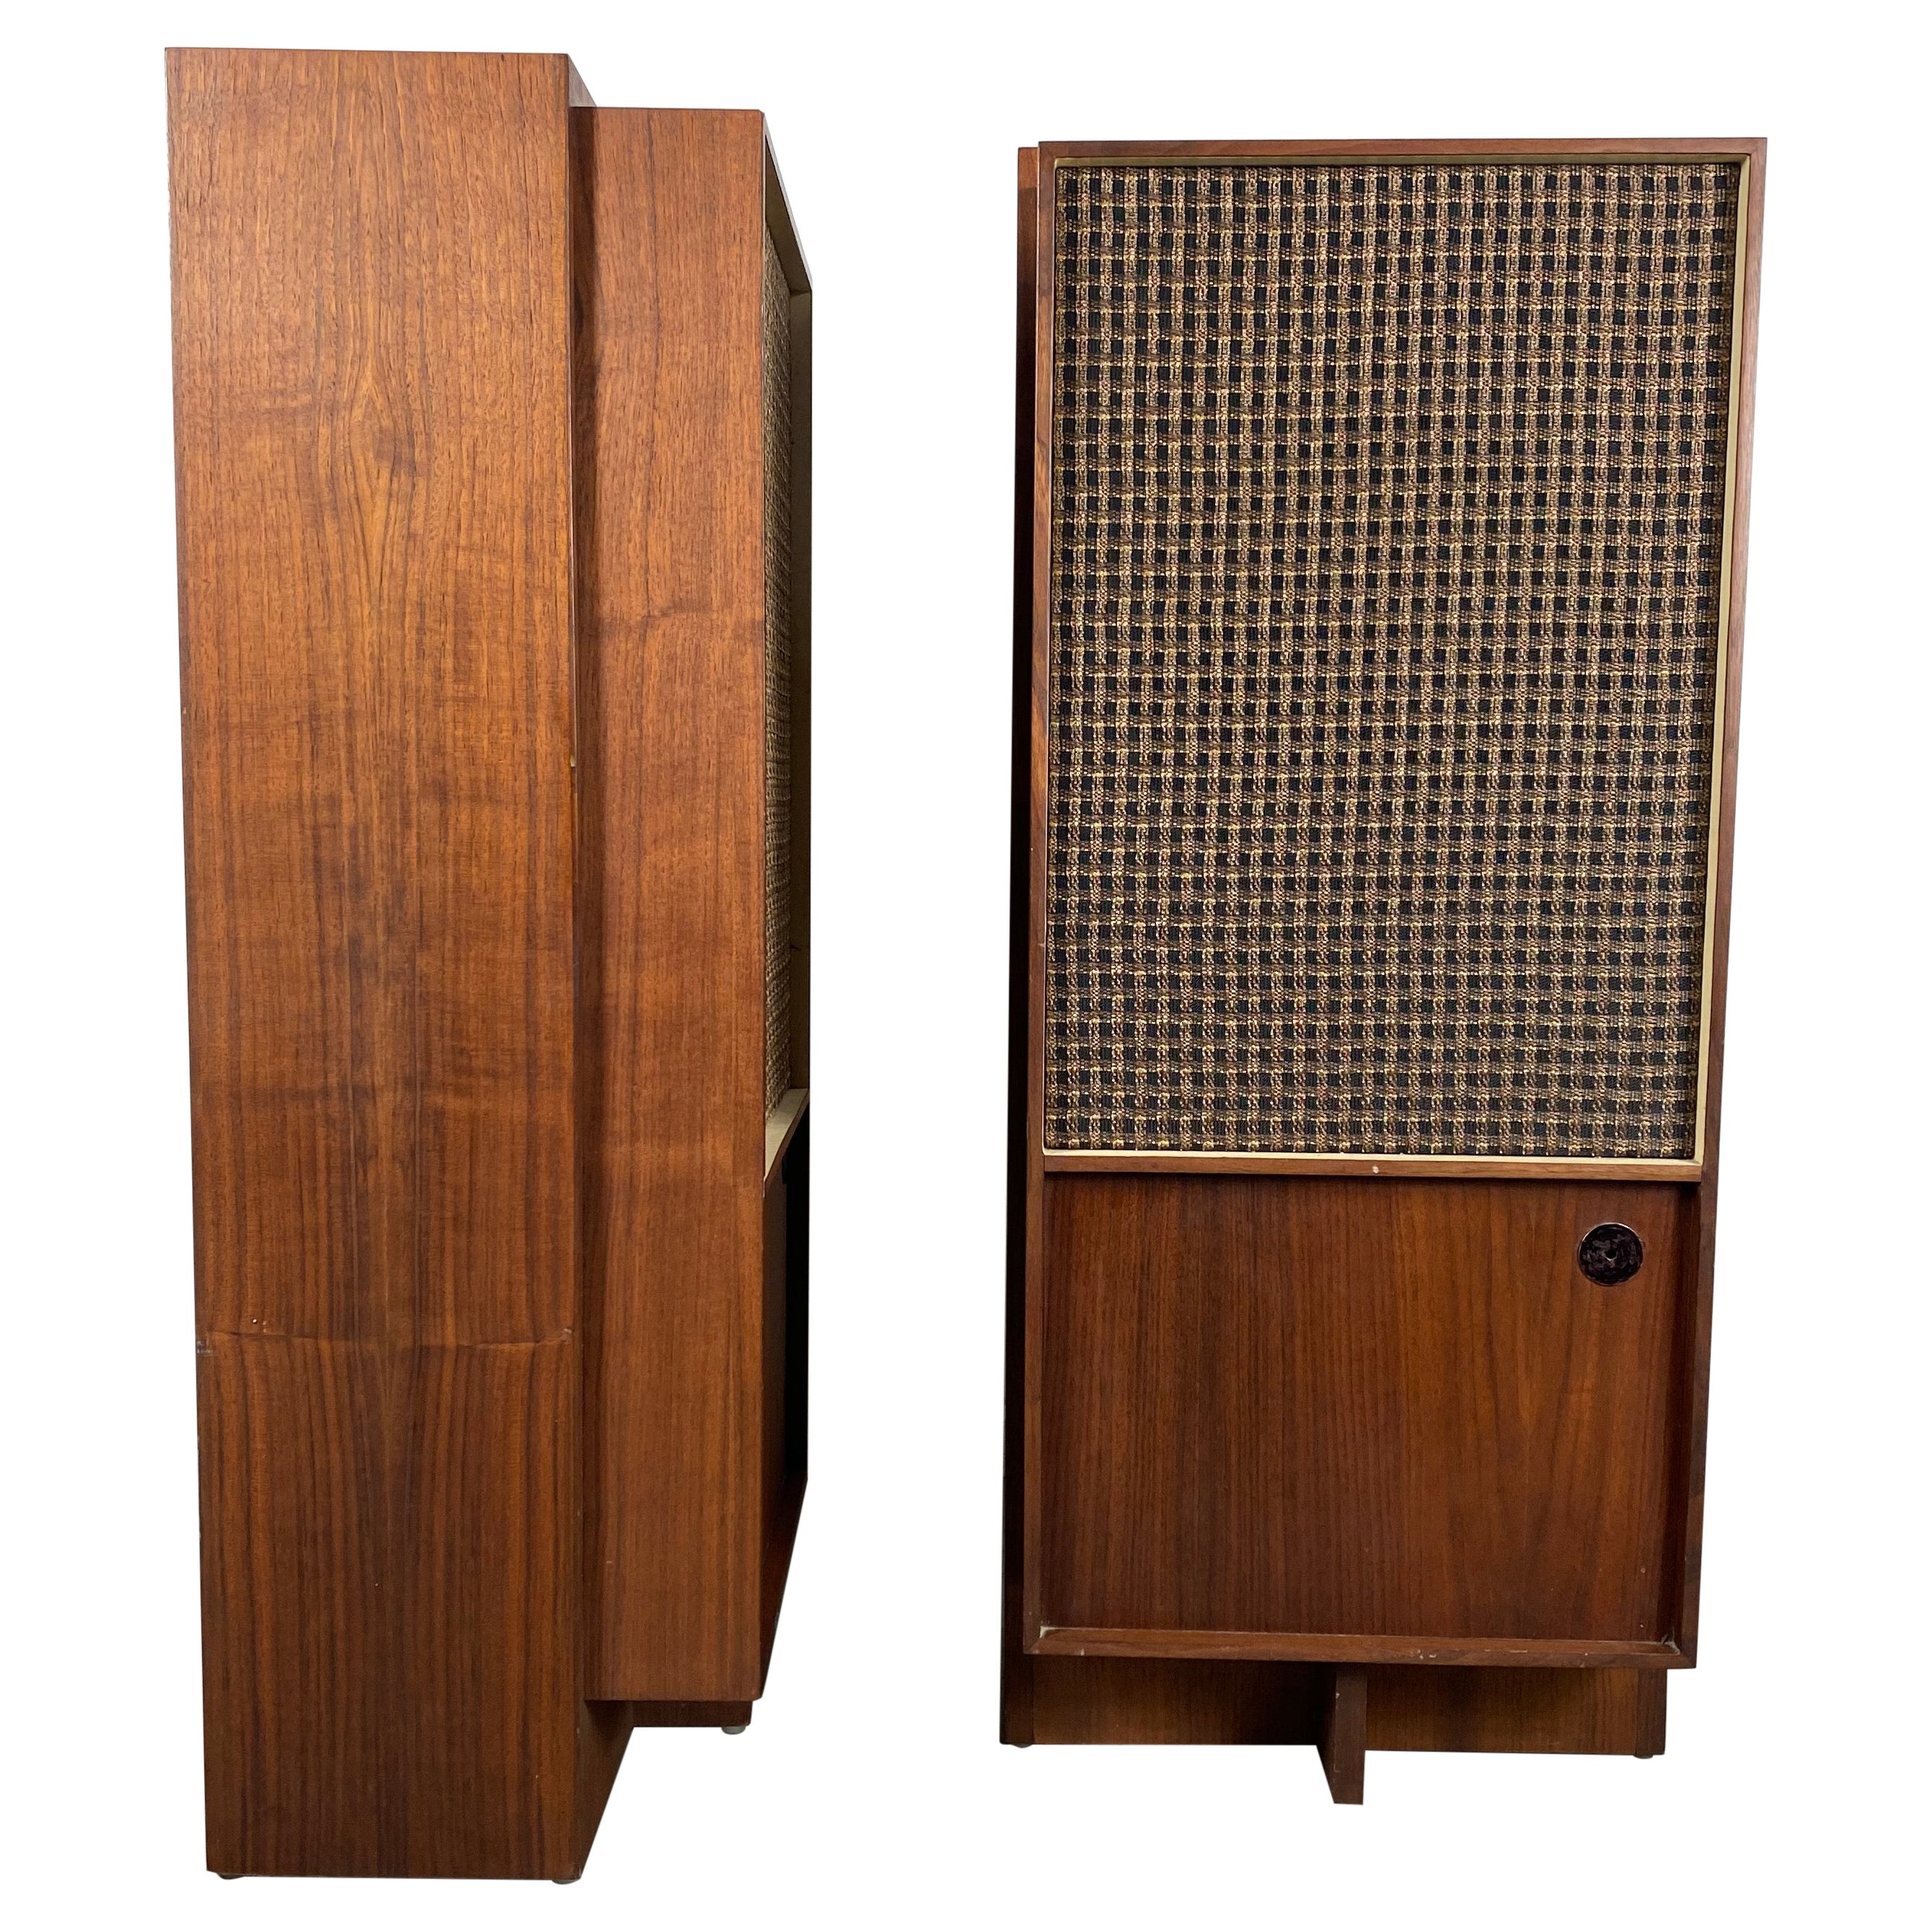 Pair Modernist Walnut Audio Speakers by Bozak, Frank Lloyd Wright Design